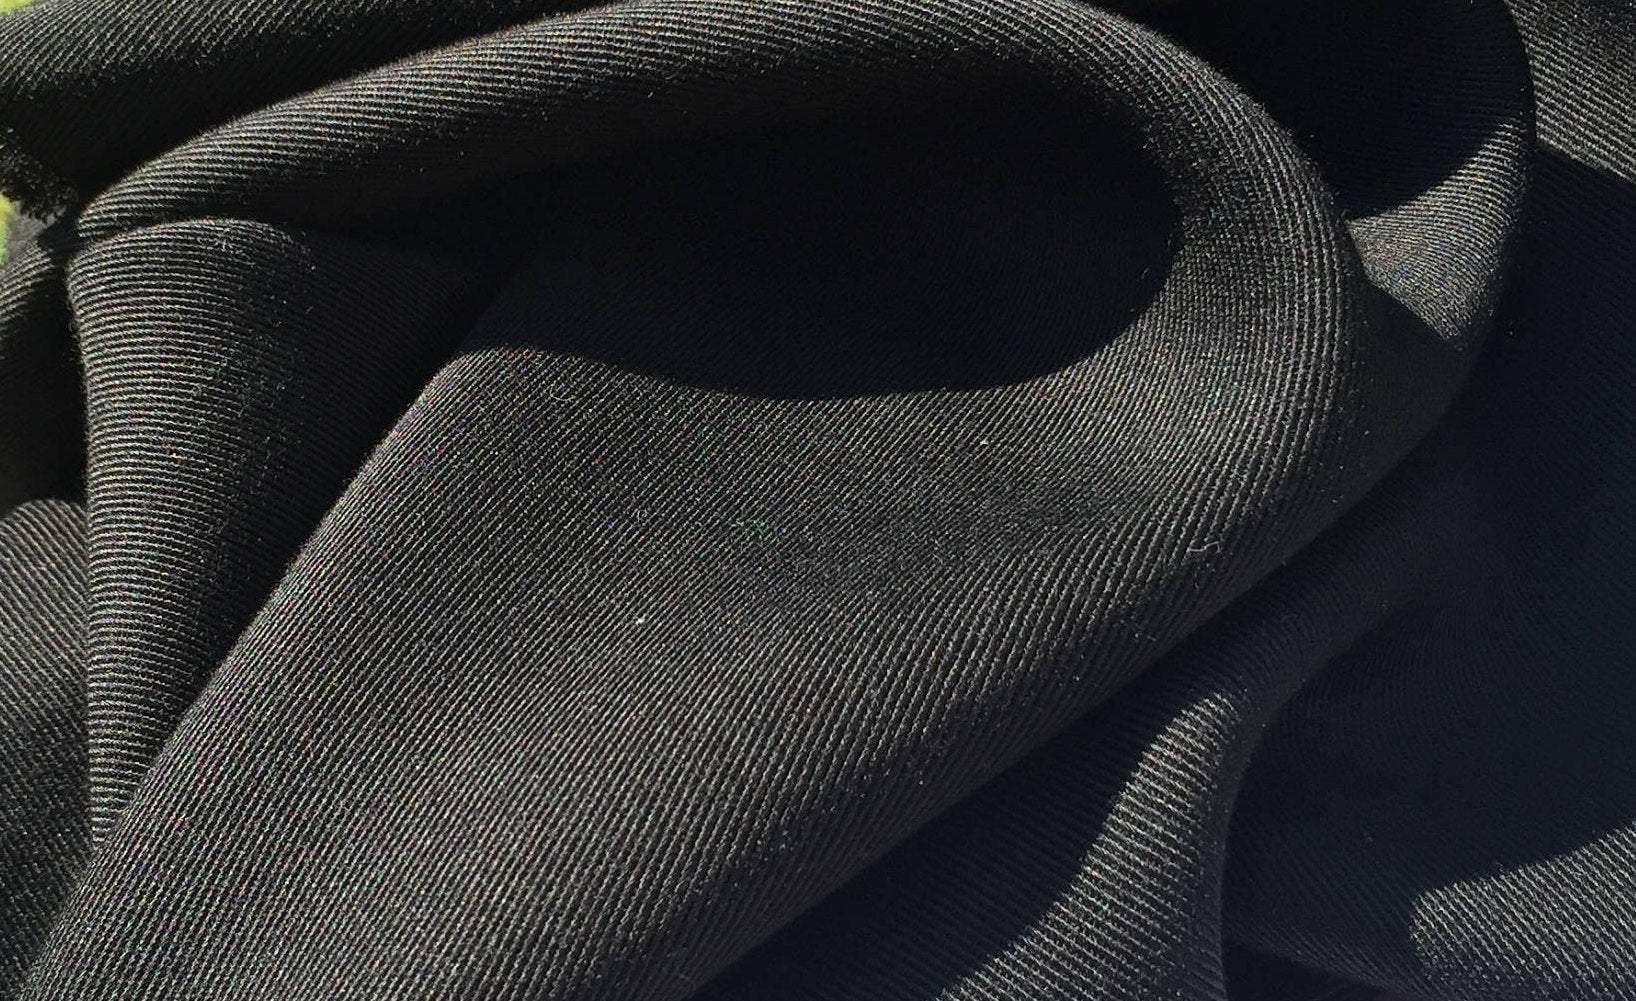 Black Gabardine Fabric  Fabric, Fabric texture, Black fabric